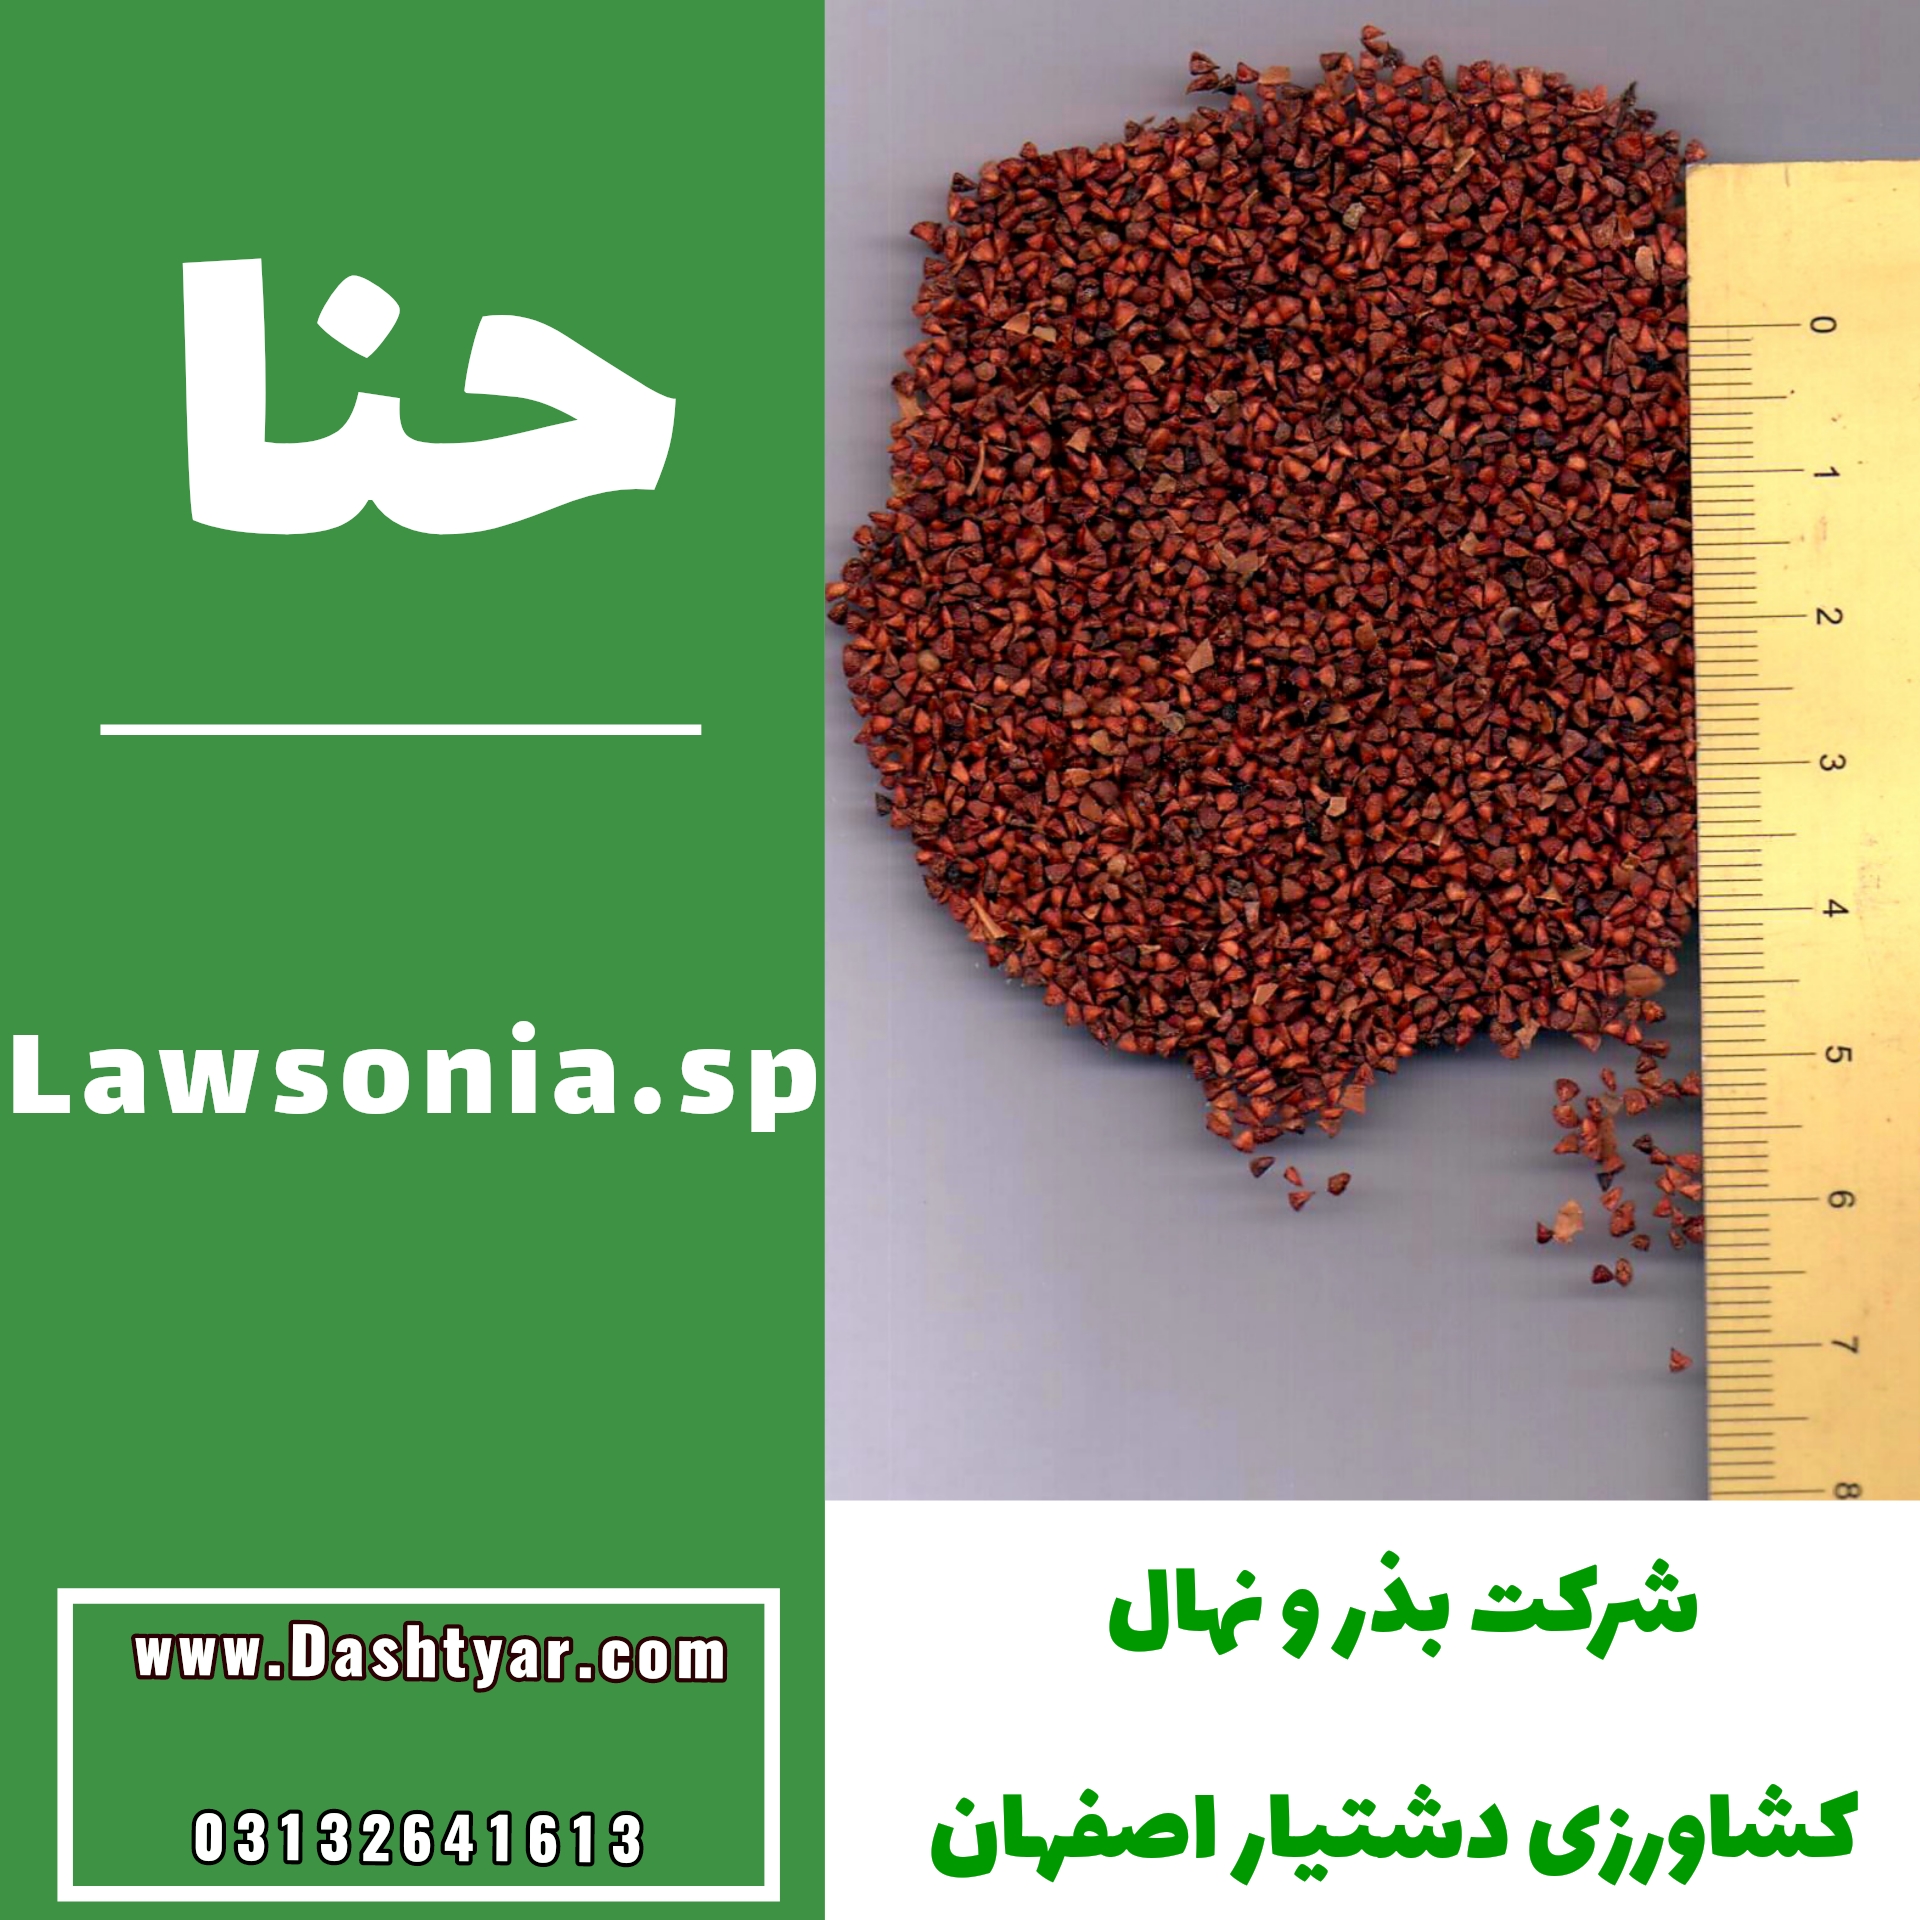 بذر حنا(Lawsonia.sp)